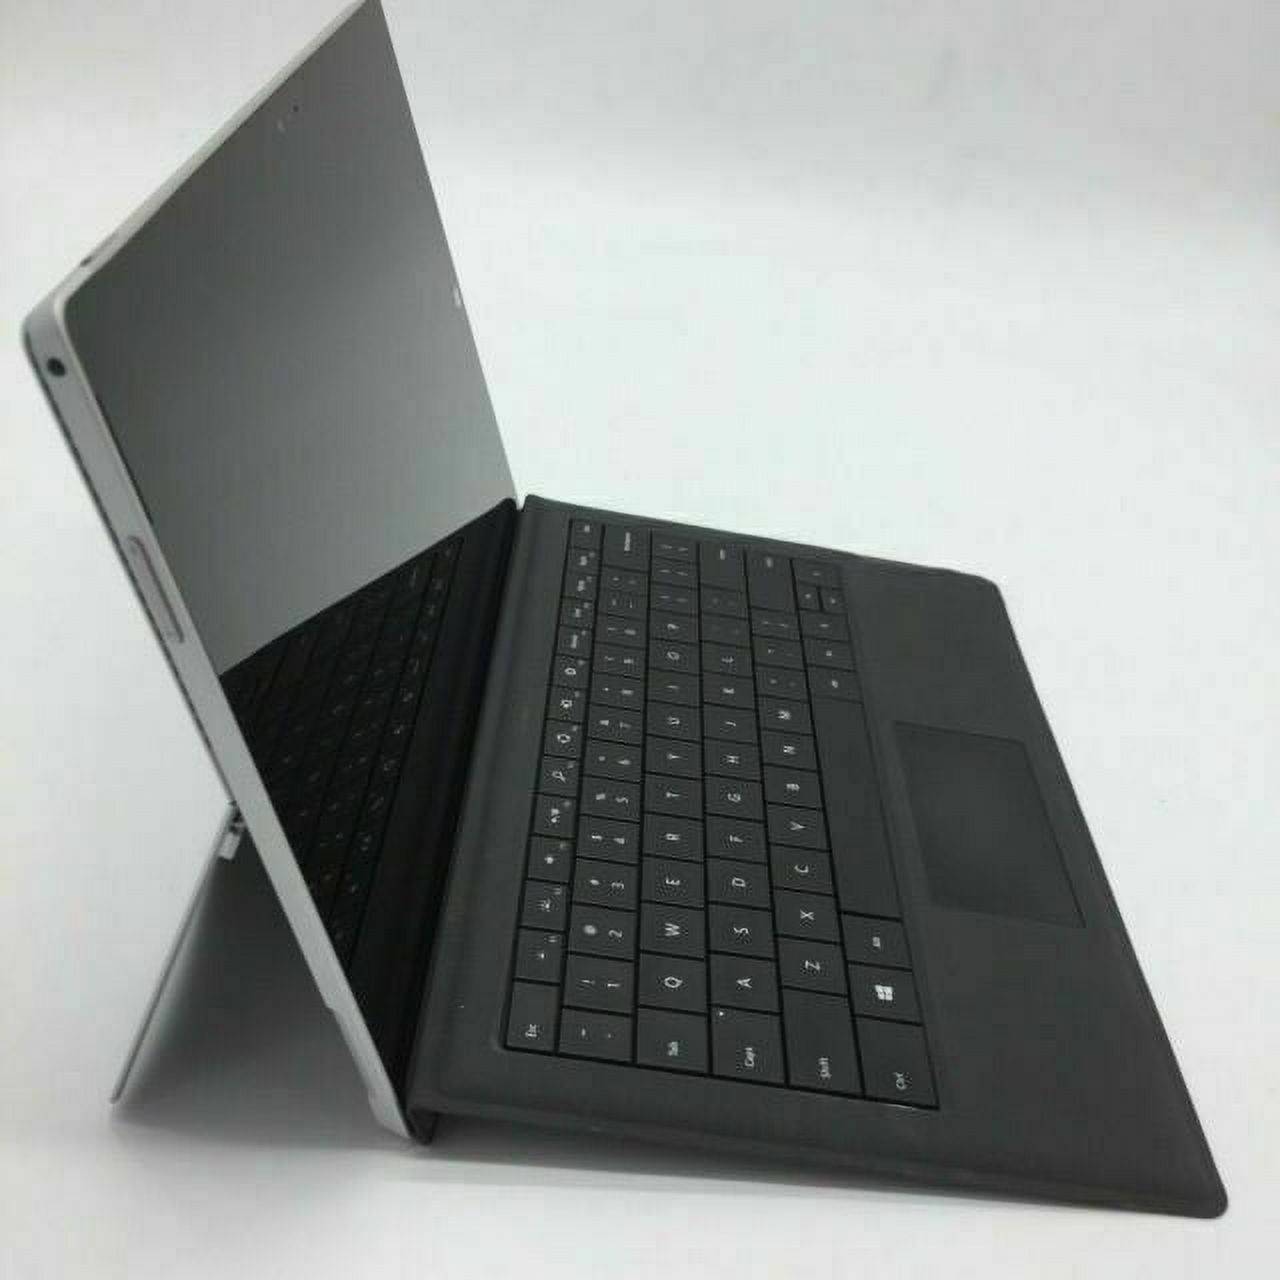 Microsoft Surface Pro 3 - Laptop / Tablet - Intel Core i5 4GB RAM